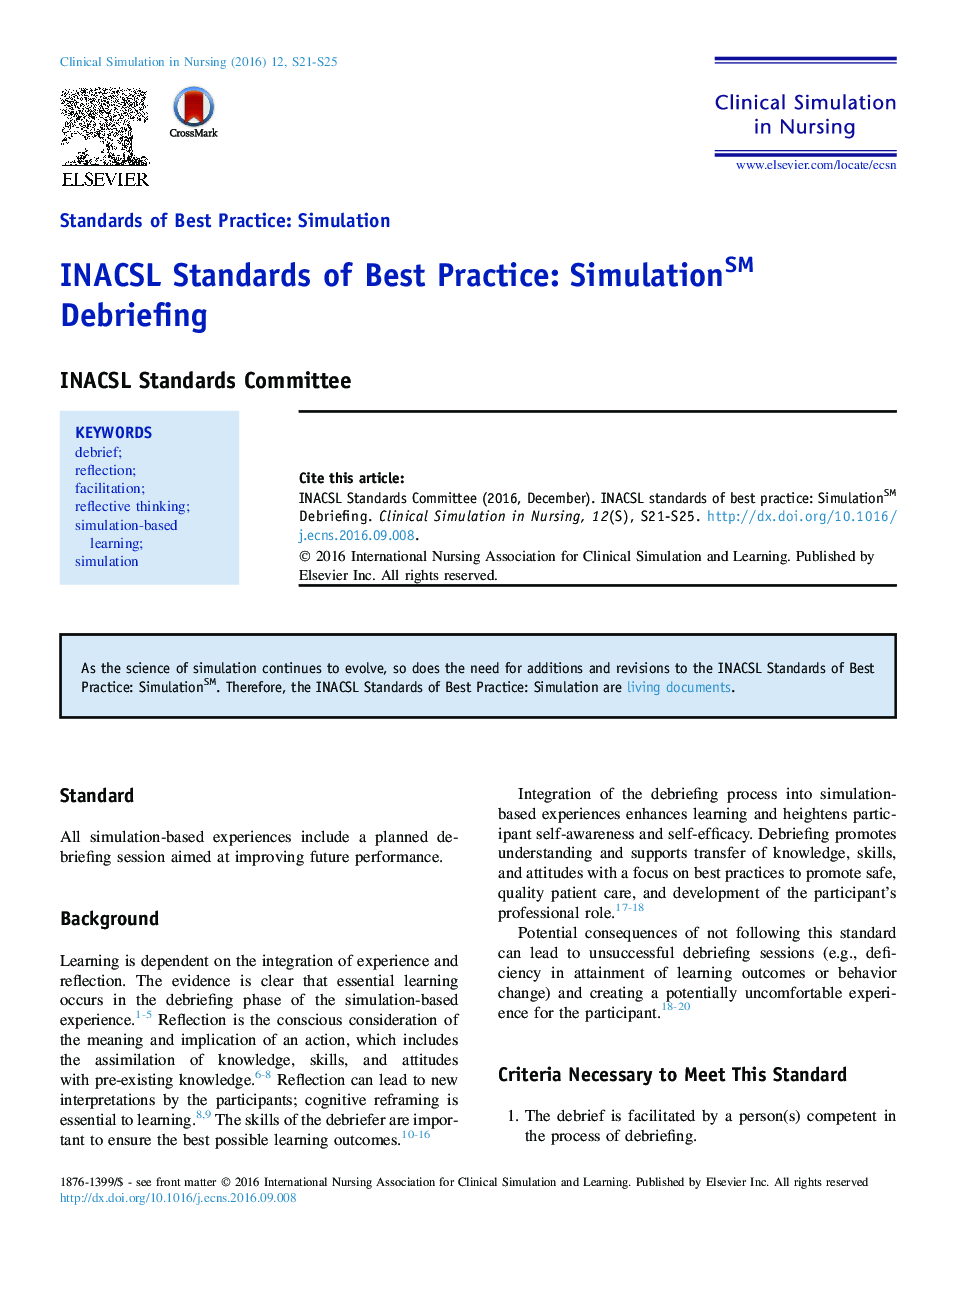 INACSL Standards of Best Practice: SimulationSM Debriefing